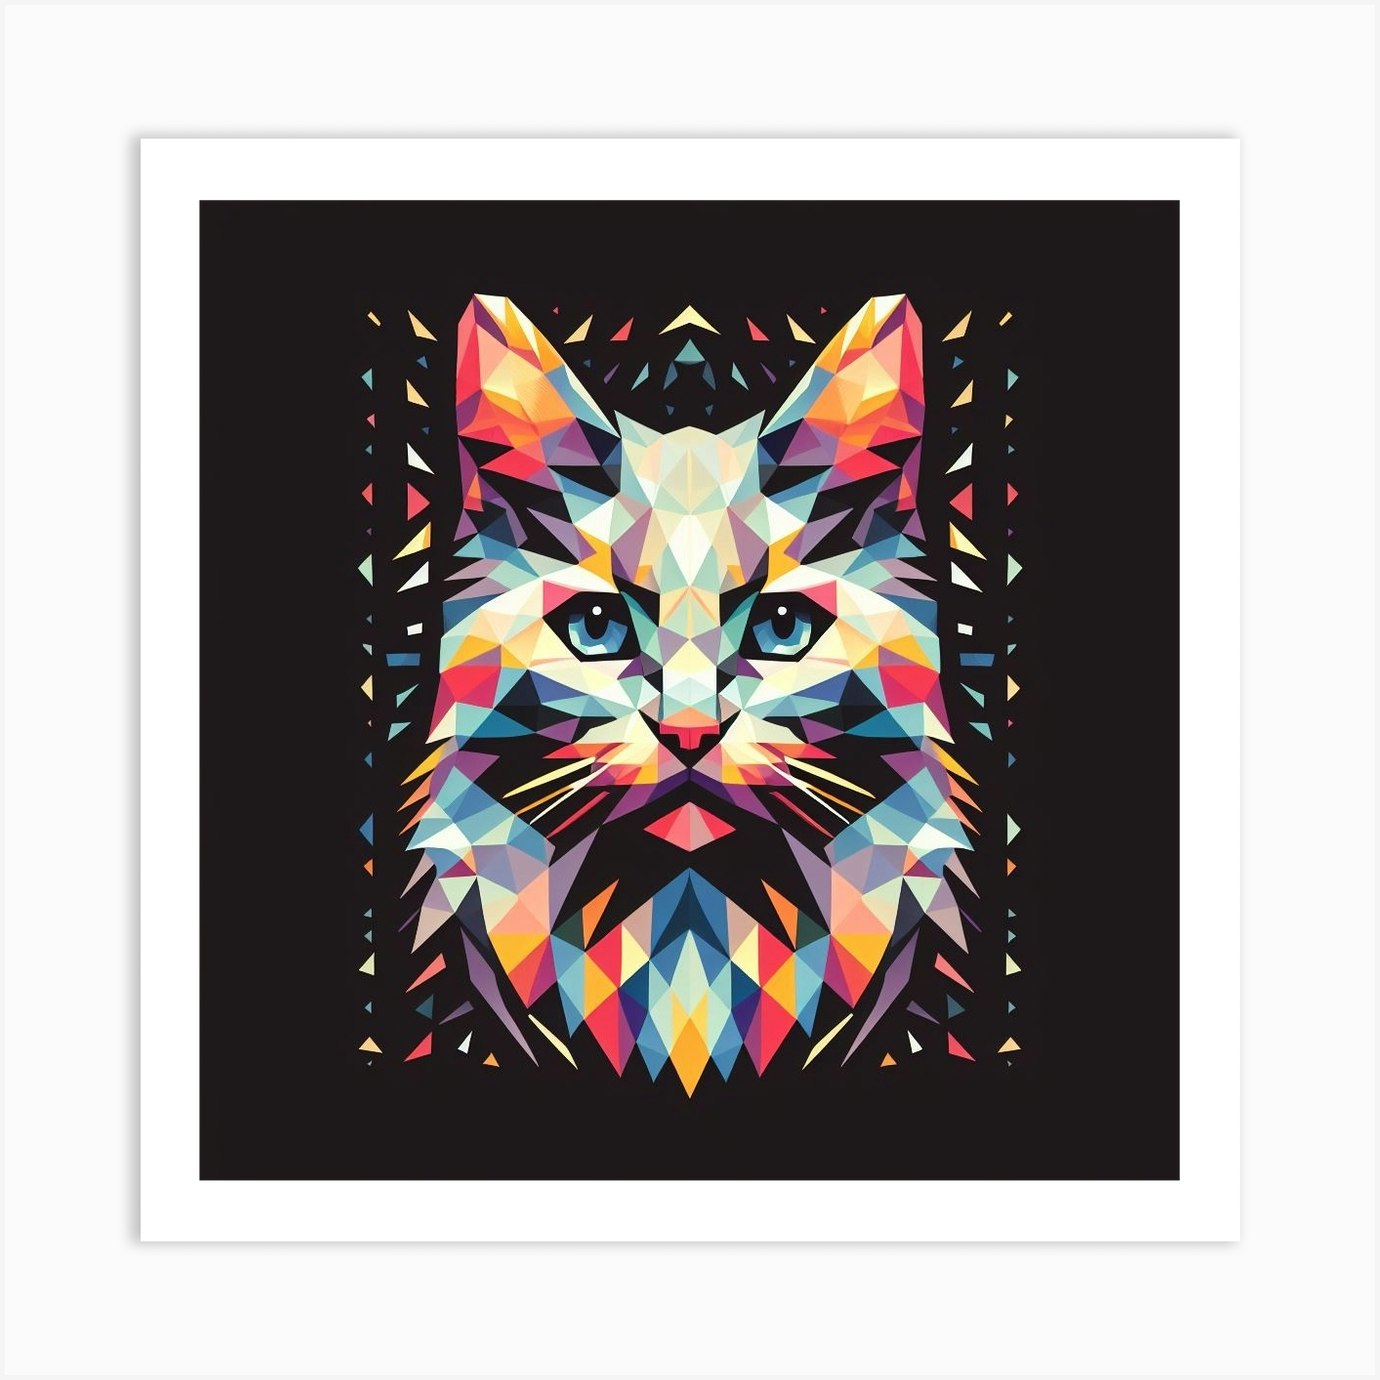 Geometric Cat Print - cat art, geometric animal prints